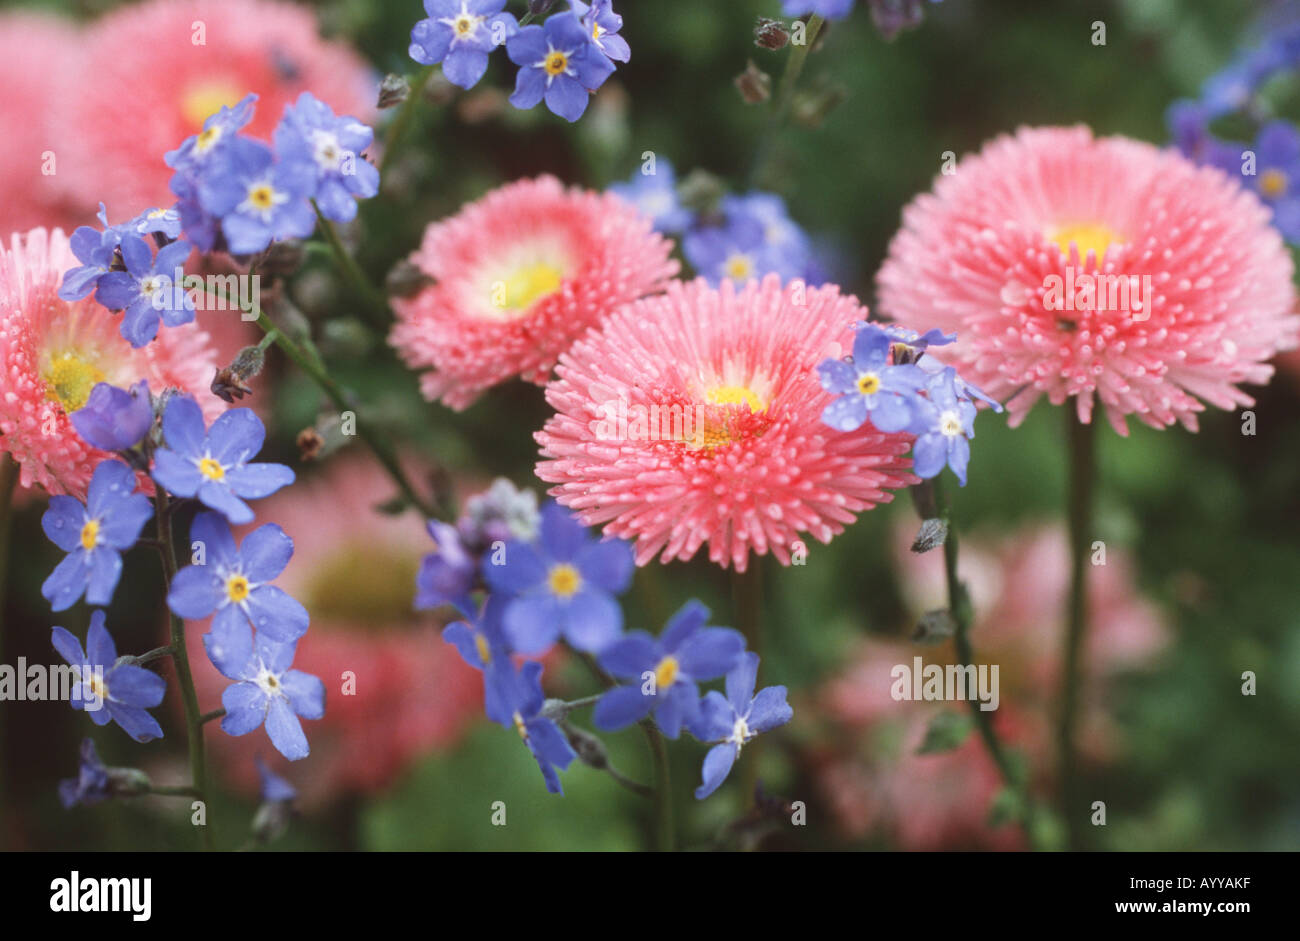 common daisy, lawn daisy, English daisy (Bellis perennis), garden form with Myostis sylvatica Stock Photo